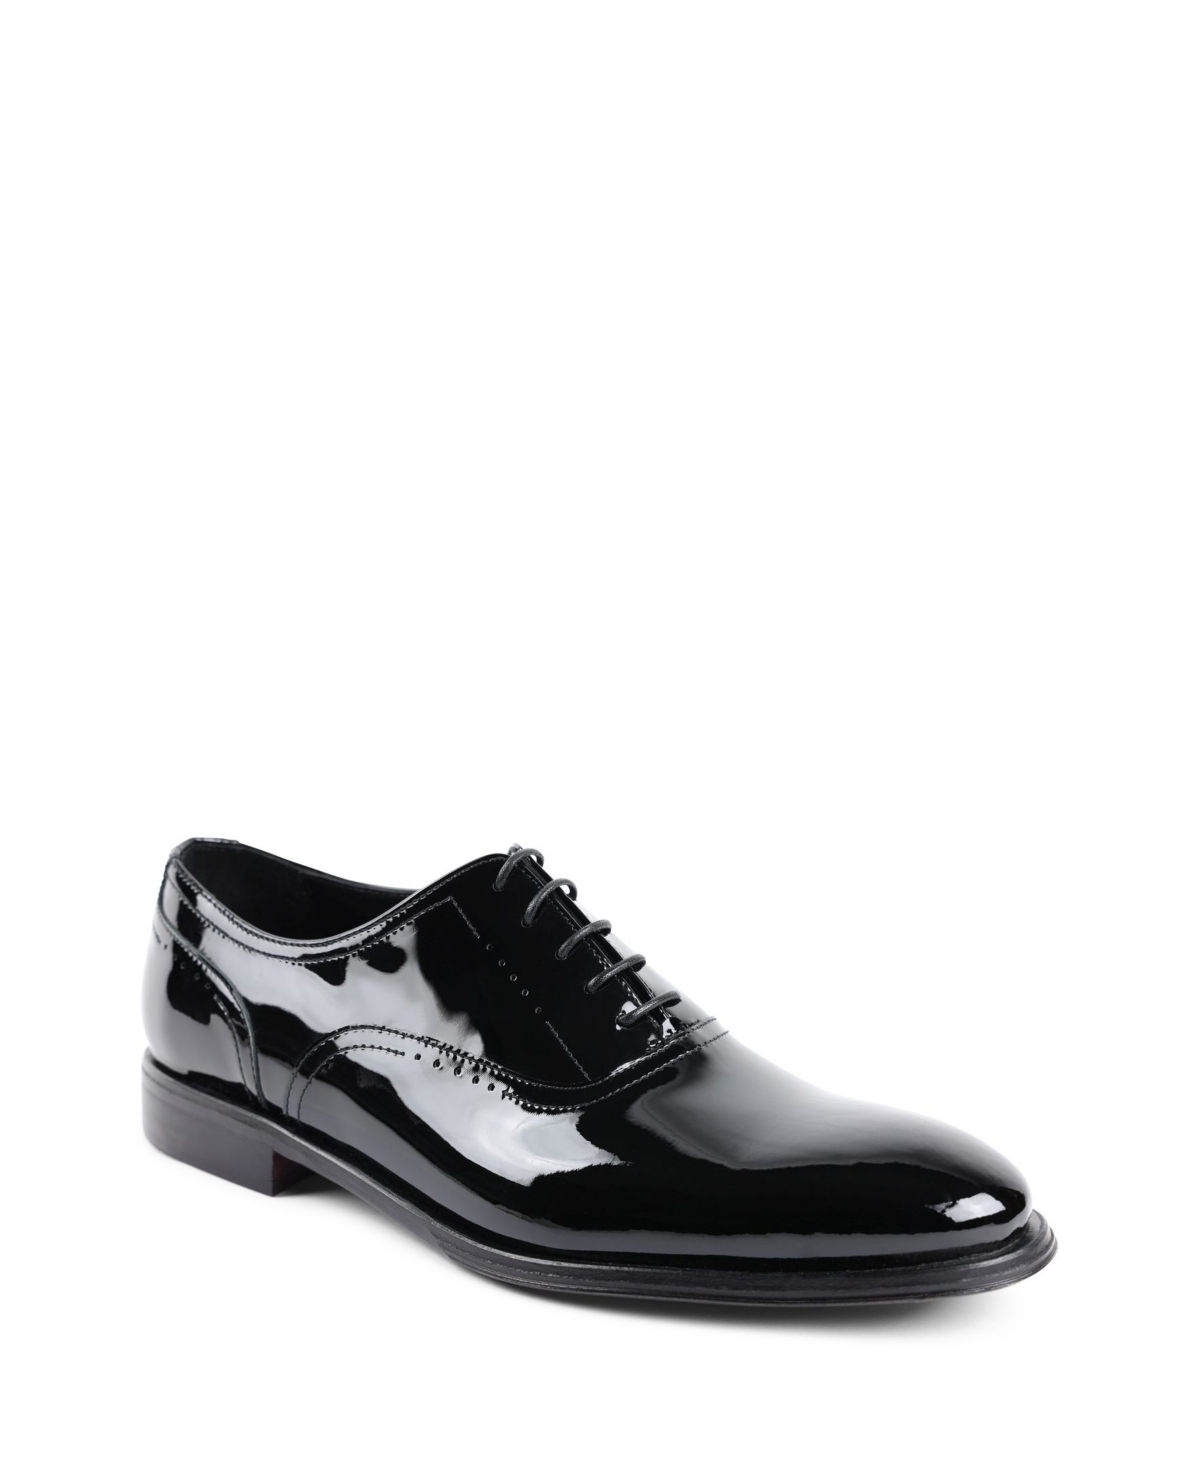 Men's Arno Sera Patent Oxford Shoes - Black Patent